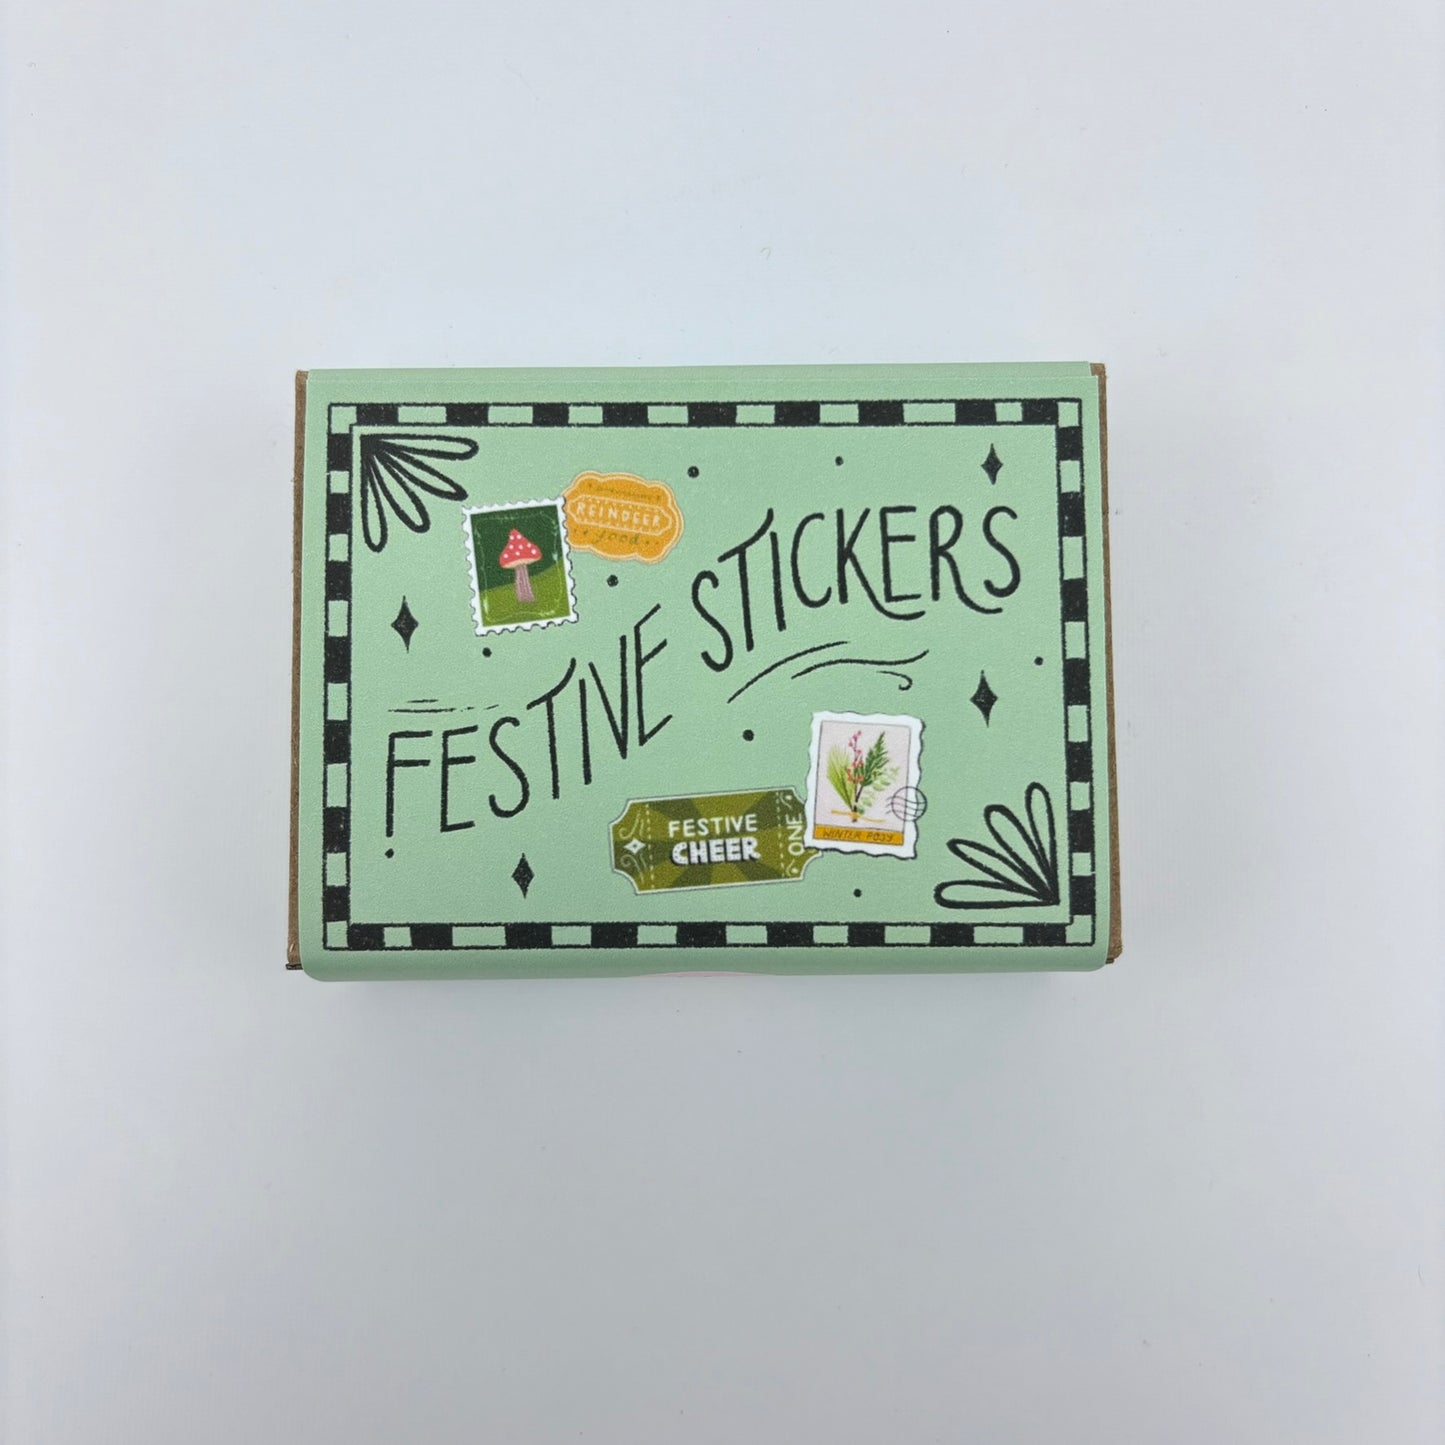 Festive Stickers Matchbox Set